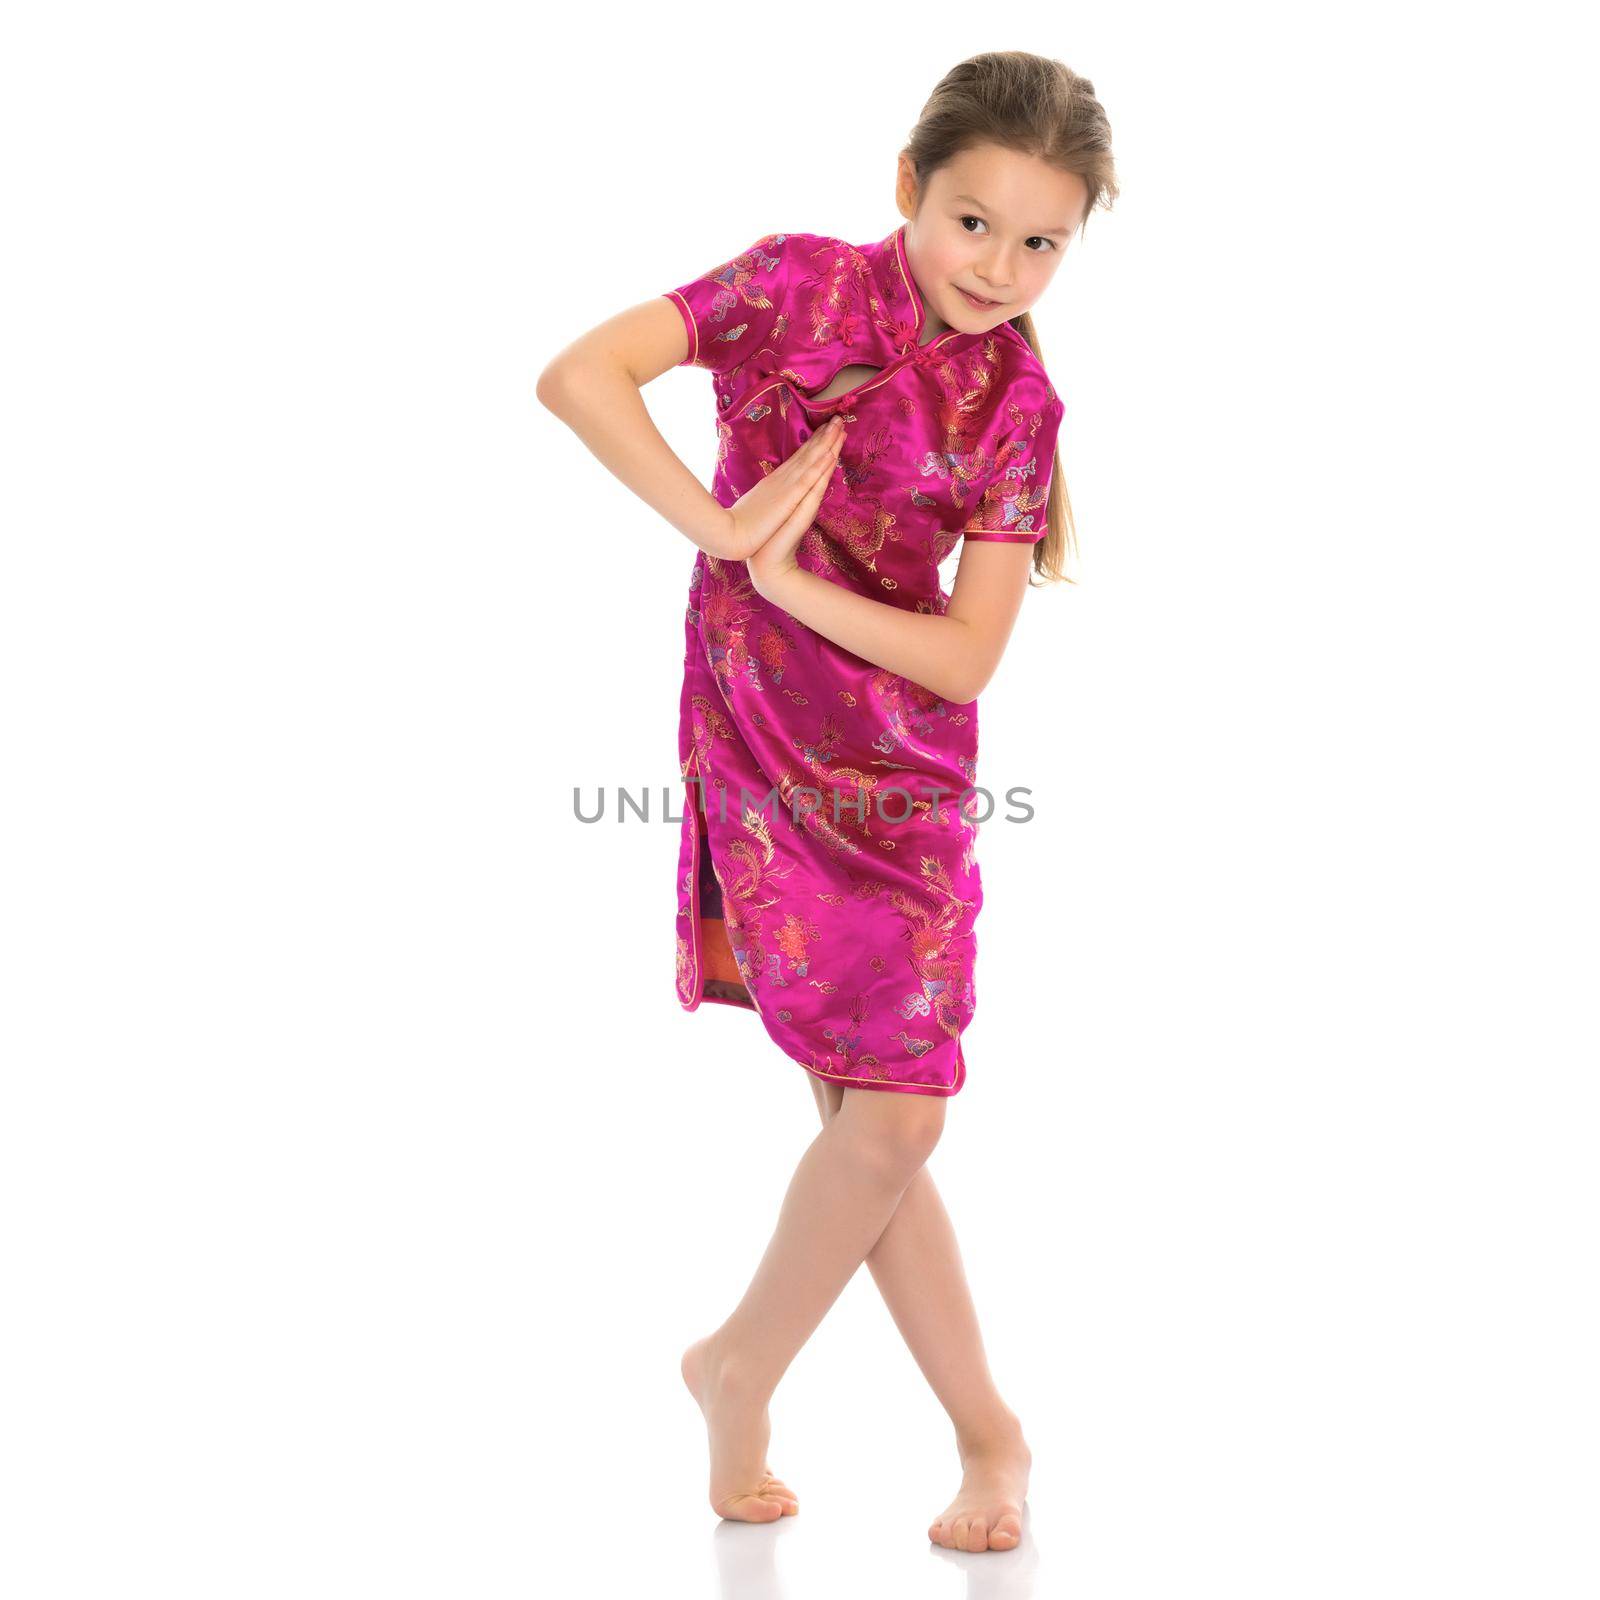 Little girl in a Chinese national dress. by kolesnikov_studio